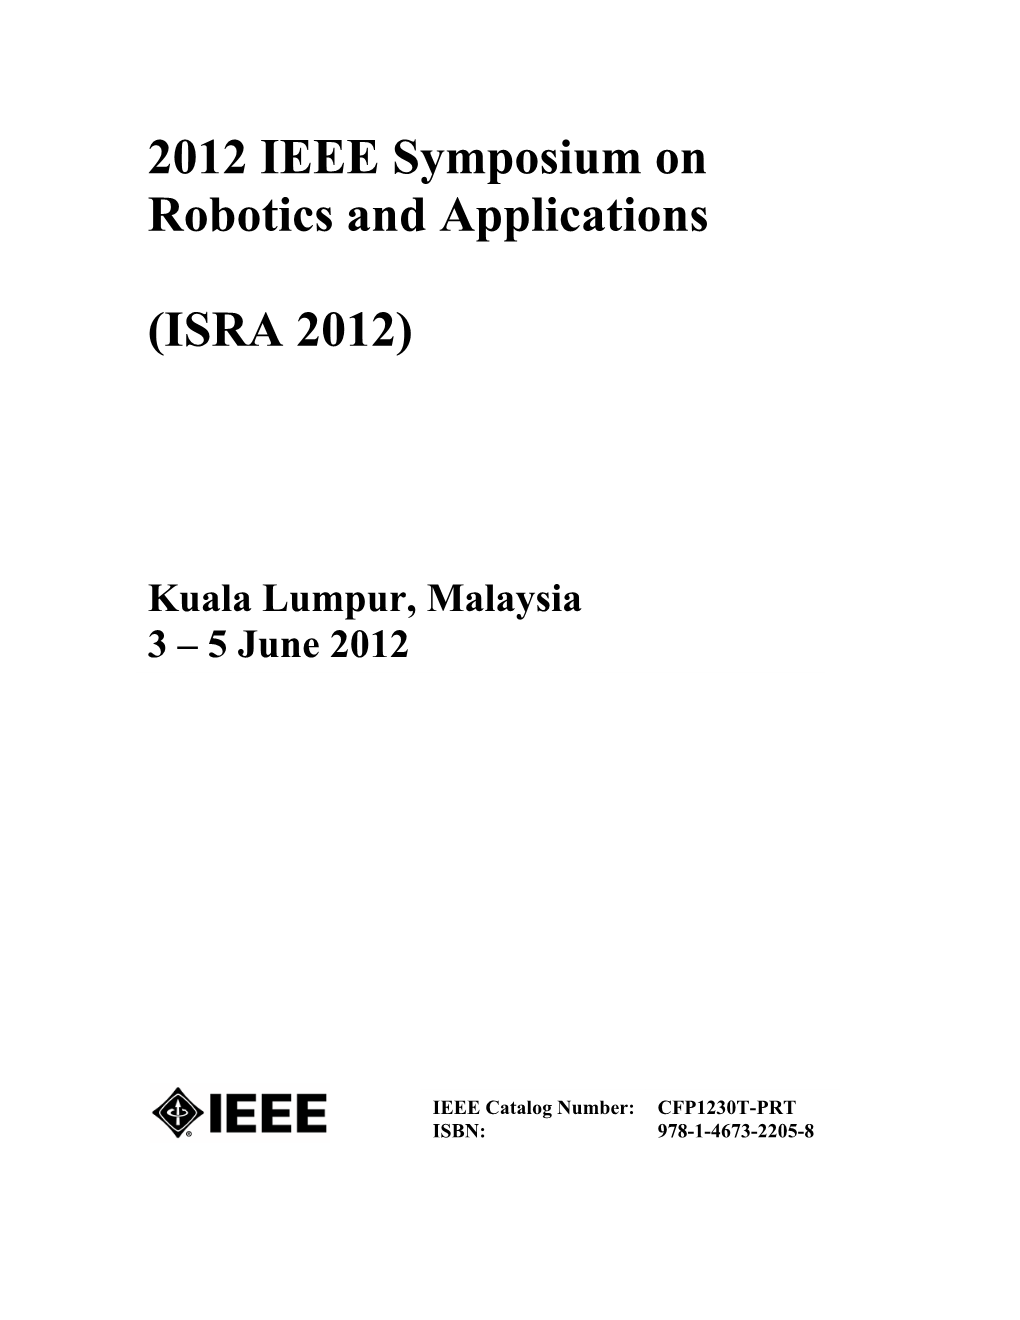 2012 IEEE Symposium on Robotics and Applications